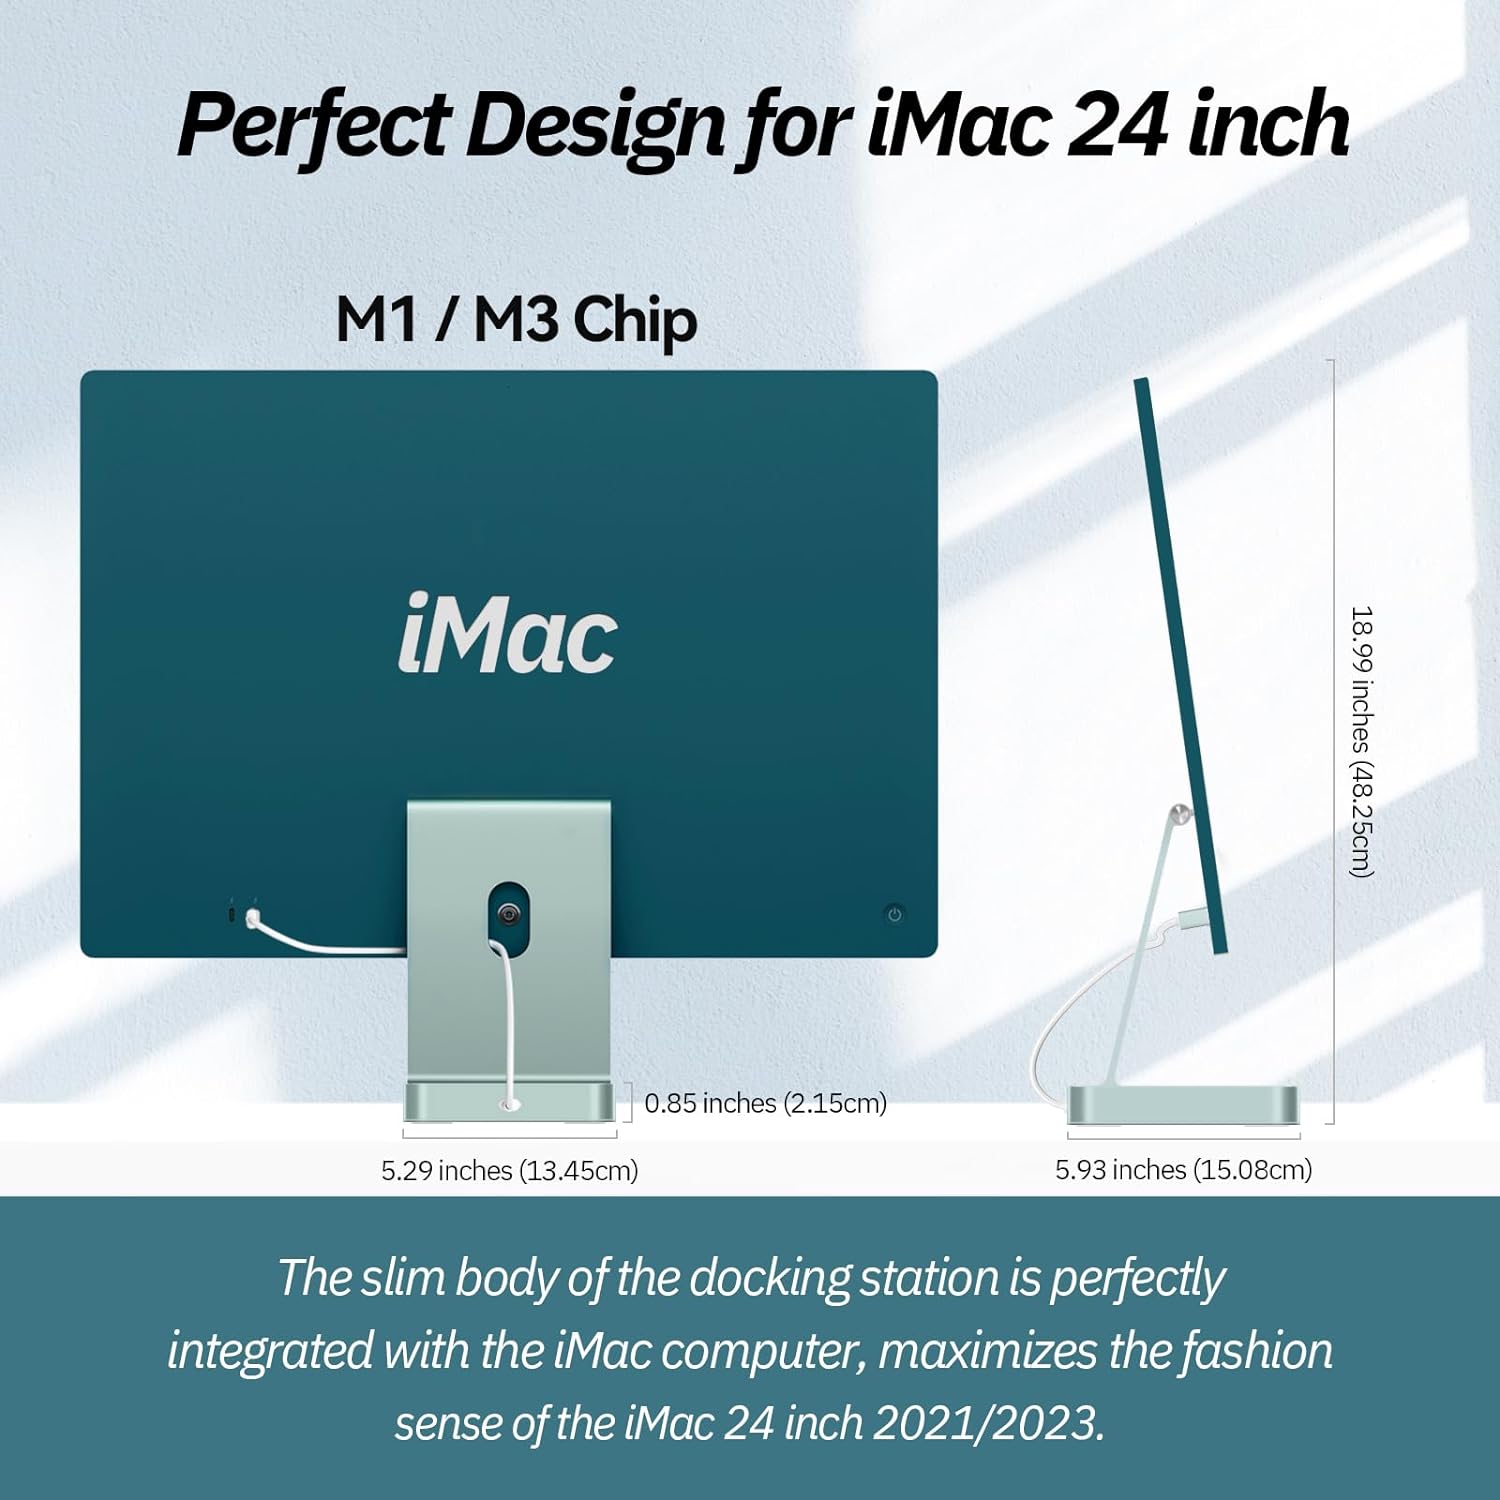 USB C Hub for iMac 24 inch 2021/2023, Minisopuru USB Hub Adapter Support  M.2 NVMe SSD, iMac USB Hub for iMac M1/M3, iMac Accessories with USB C